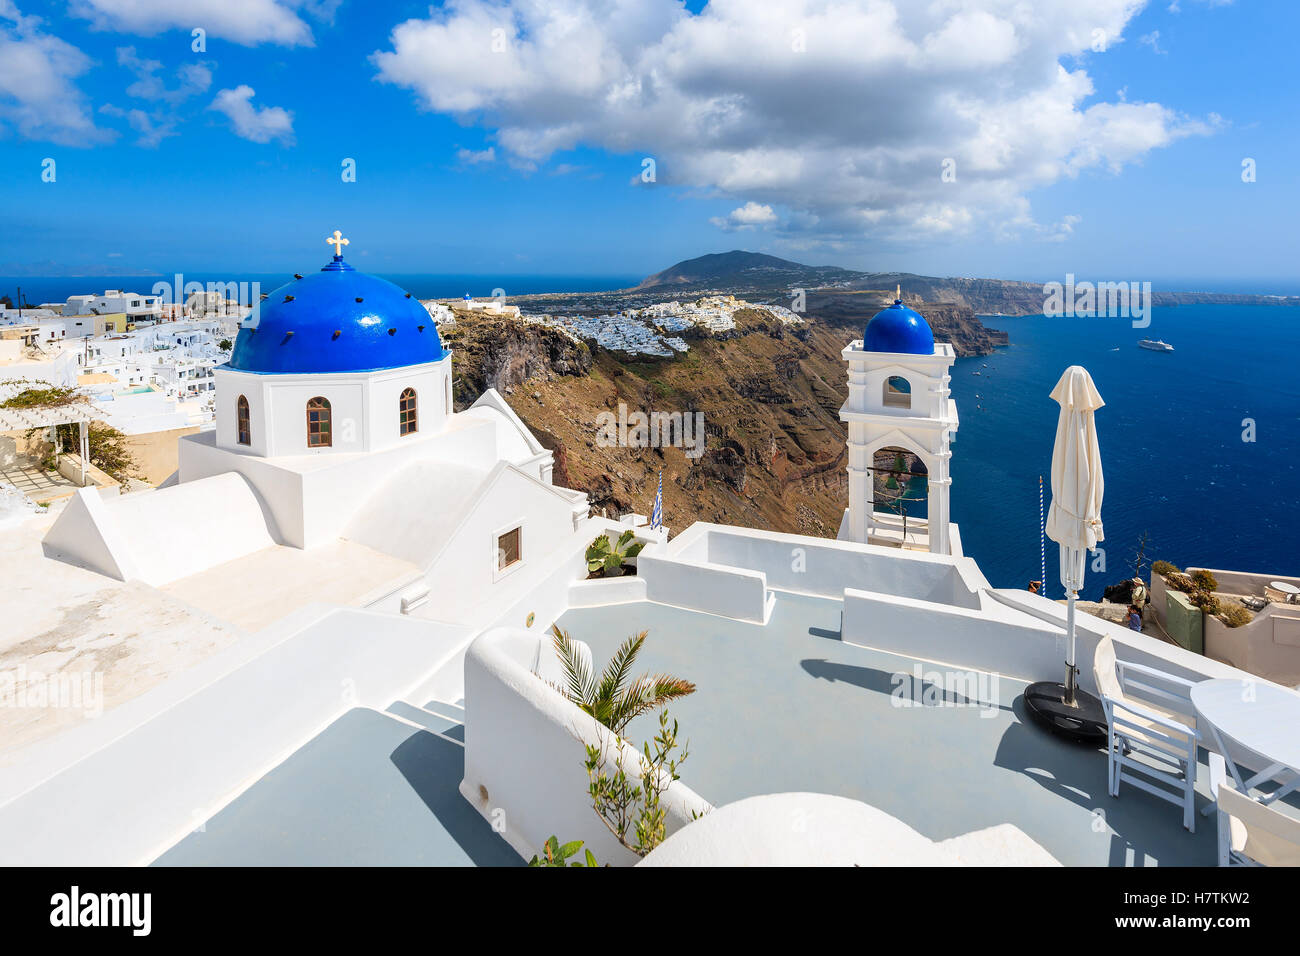 Blue dome of church in Imerovigli village and view of blue sea with caldera on Santorini island, Greece Stock Photo